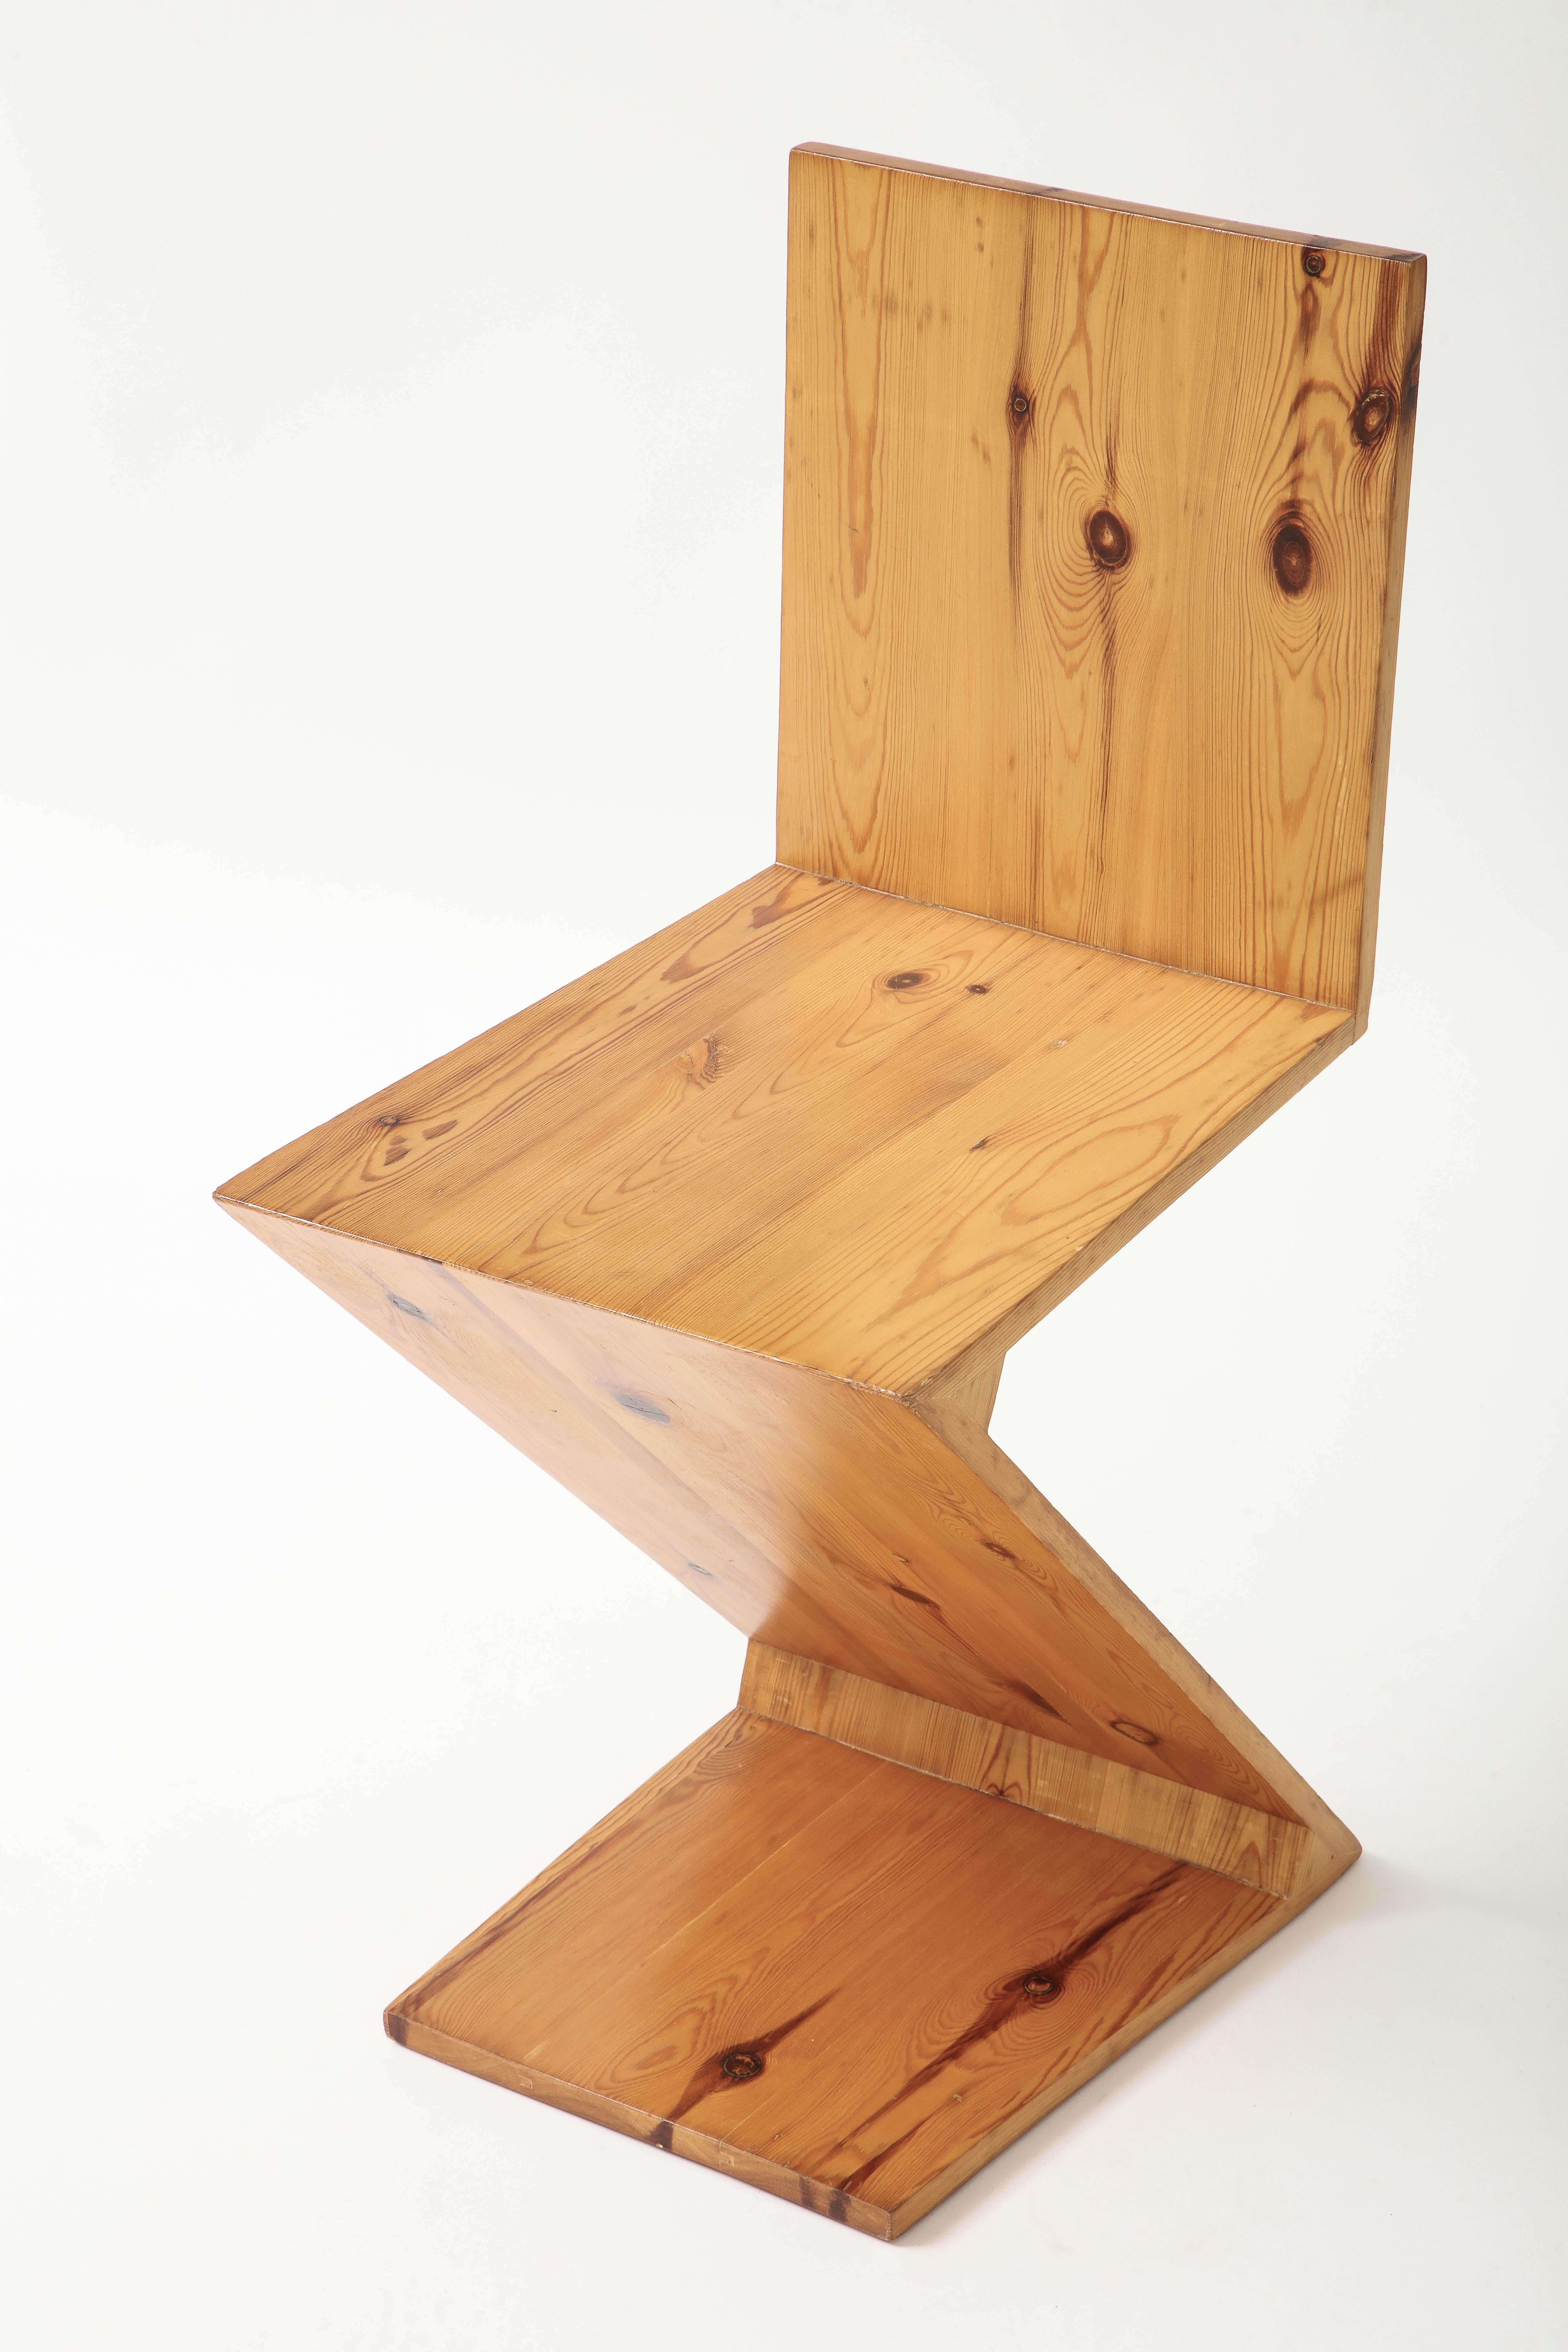 Pine Jan Cornelis Rietveld Zig Zag Chair, Netherlands For Sale